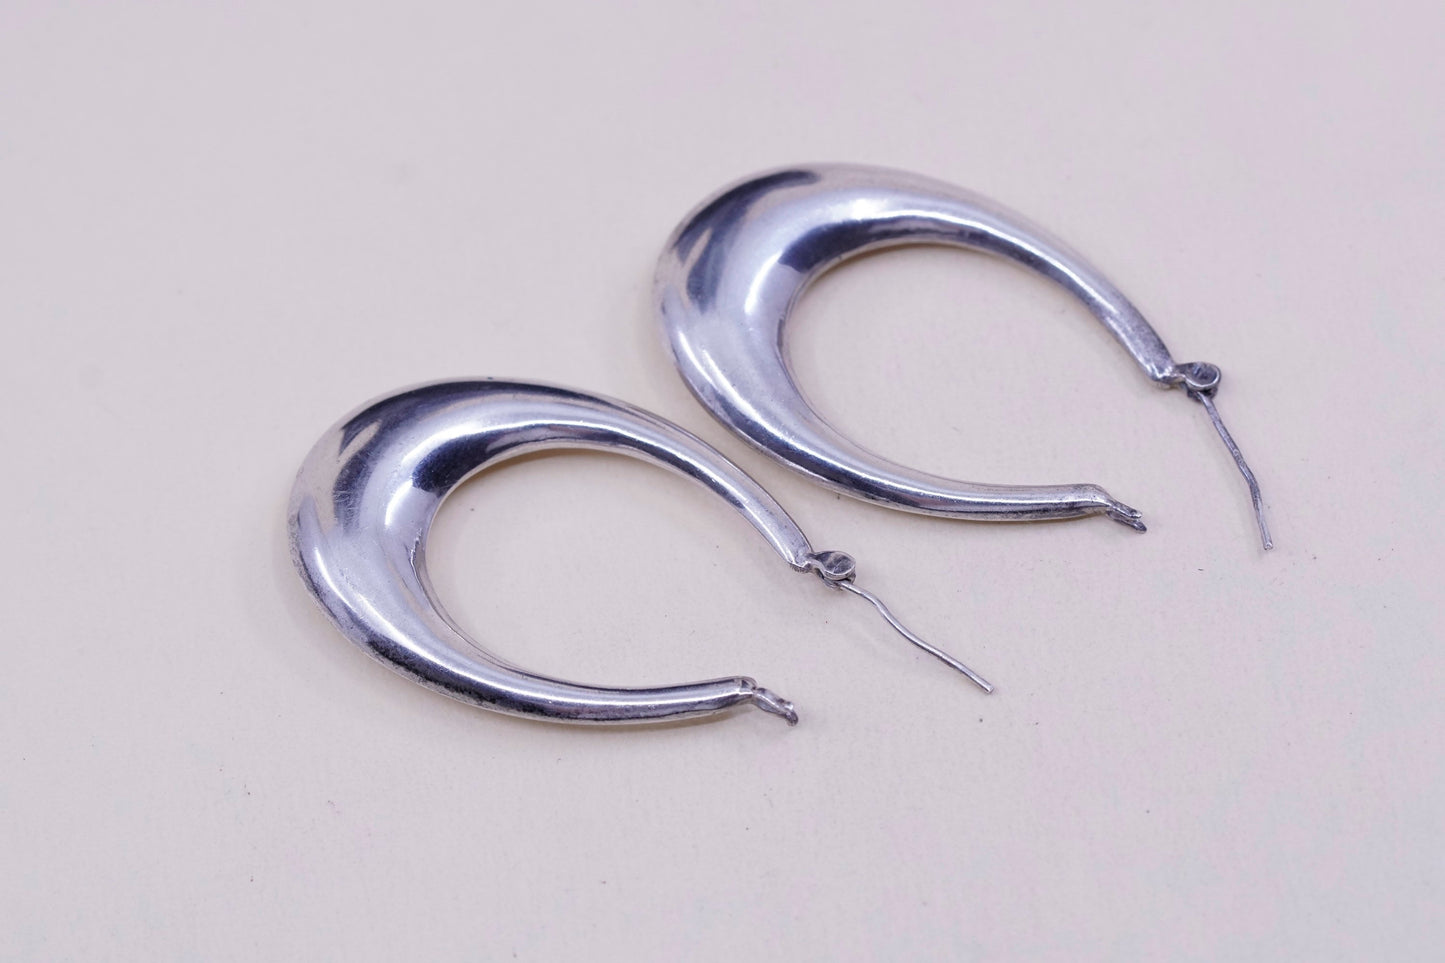 1.75” vtg sterling silver handmade earrings, minimalist primitive oval hoops